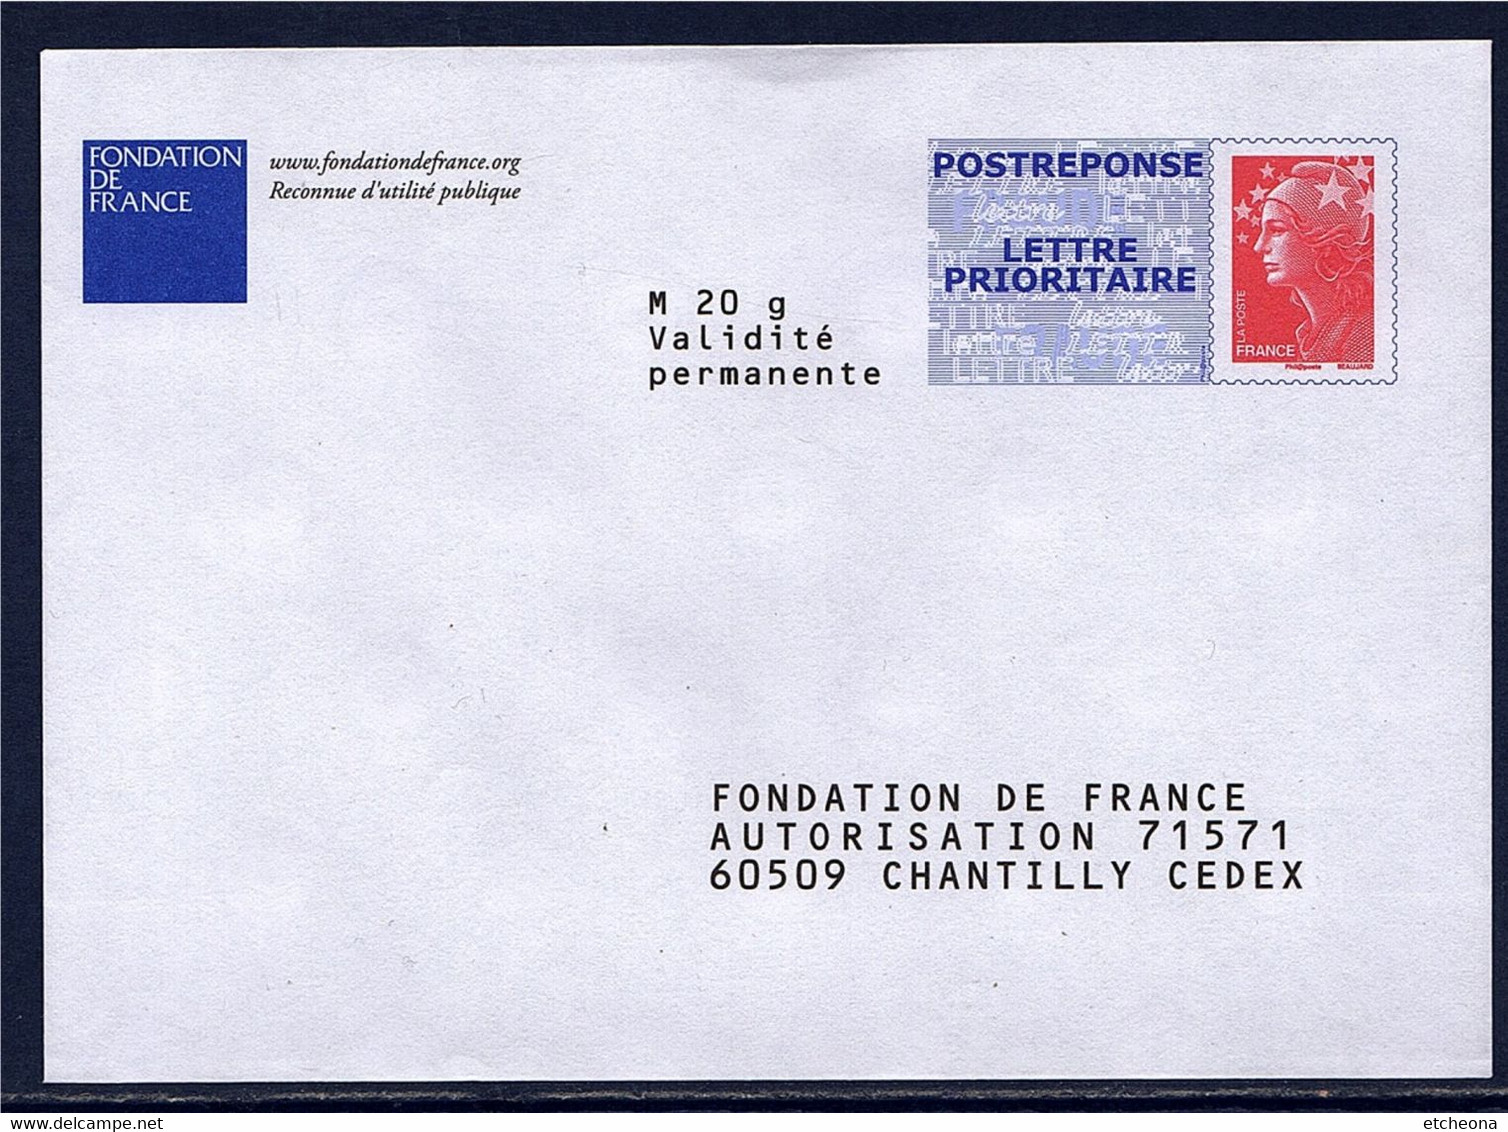 Fondation De France Enveloppe Postréponse Marianne Beaujard Neuve TVP LP Lot 09P344 Type N°4230 - Listos A Ser Enviados: Respuesta